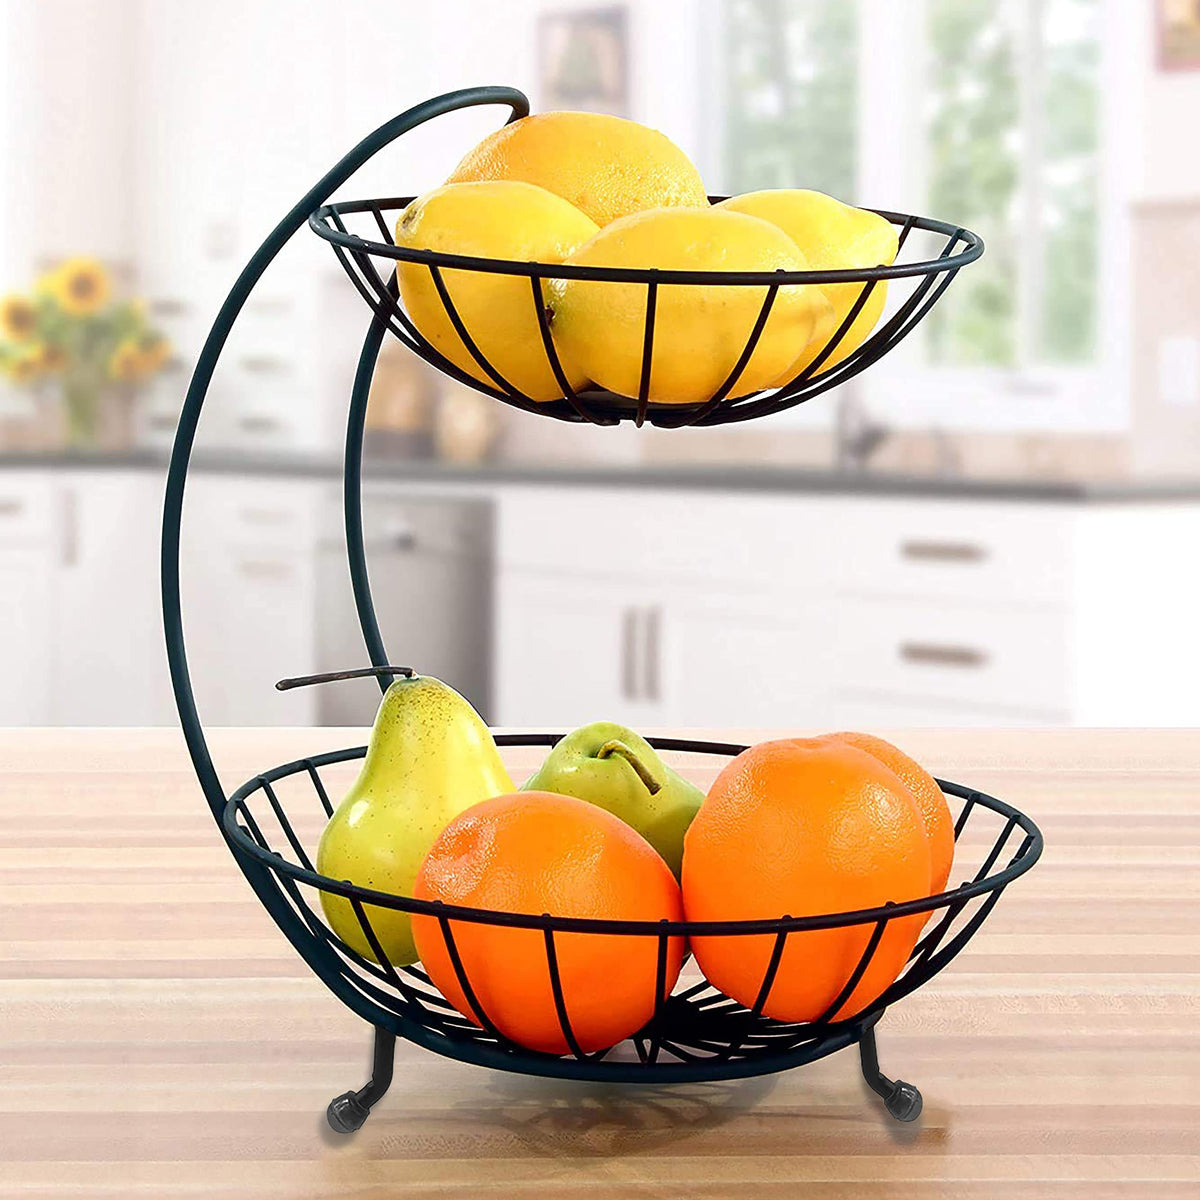 Plantex Heavy Steel 2-Tier Fruit & Vegetable Basket For Dining Table/Kitchen - Countertop (Black), 9 liter